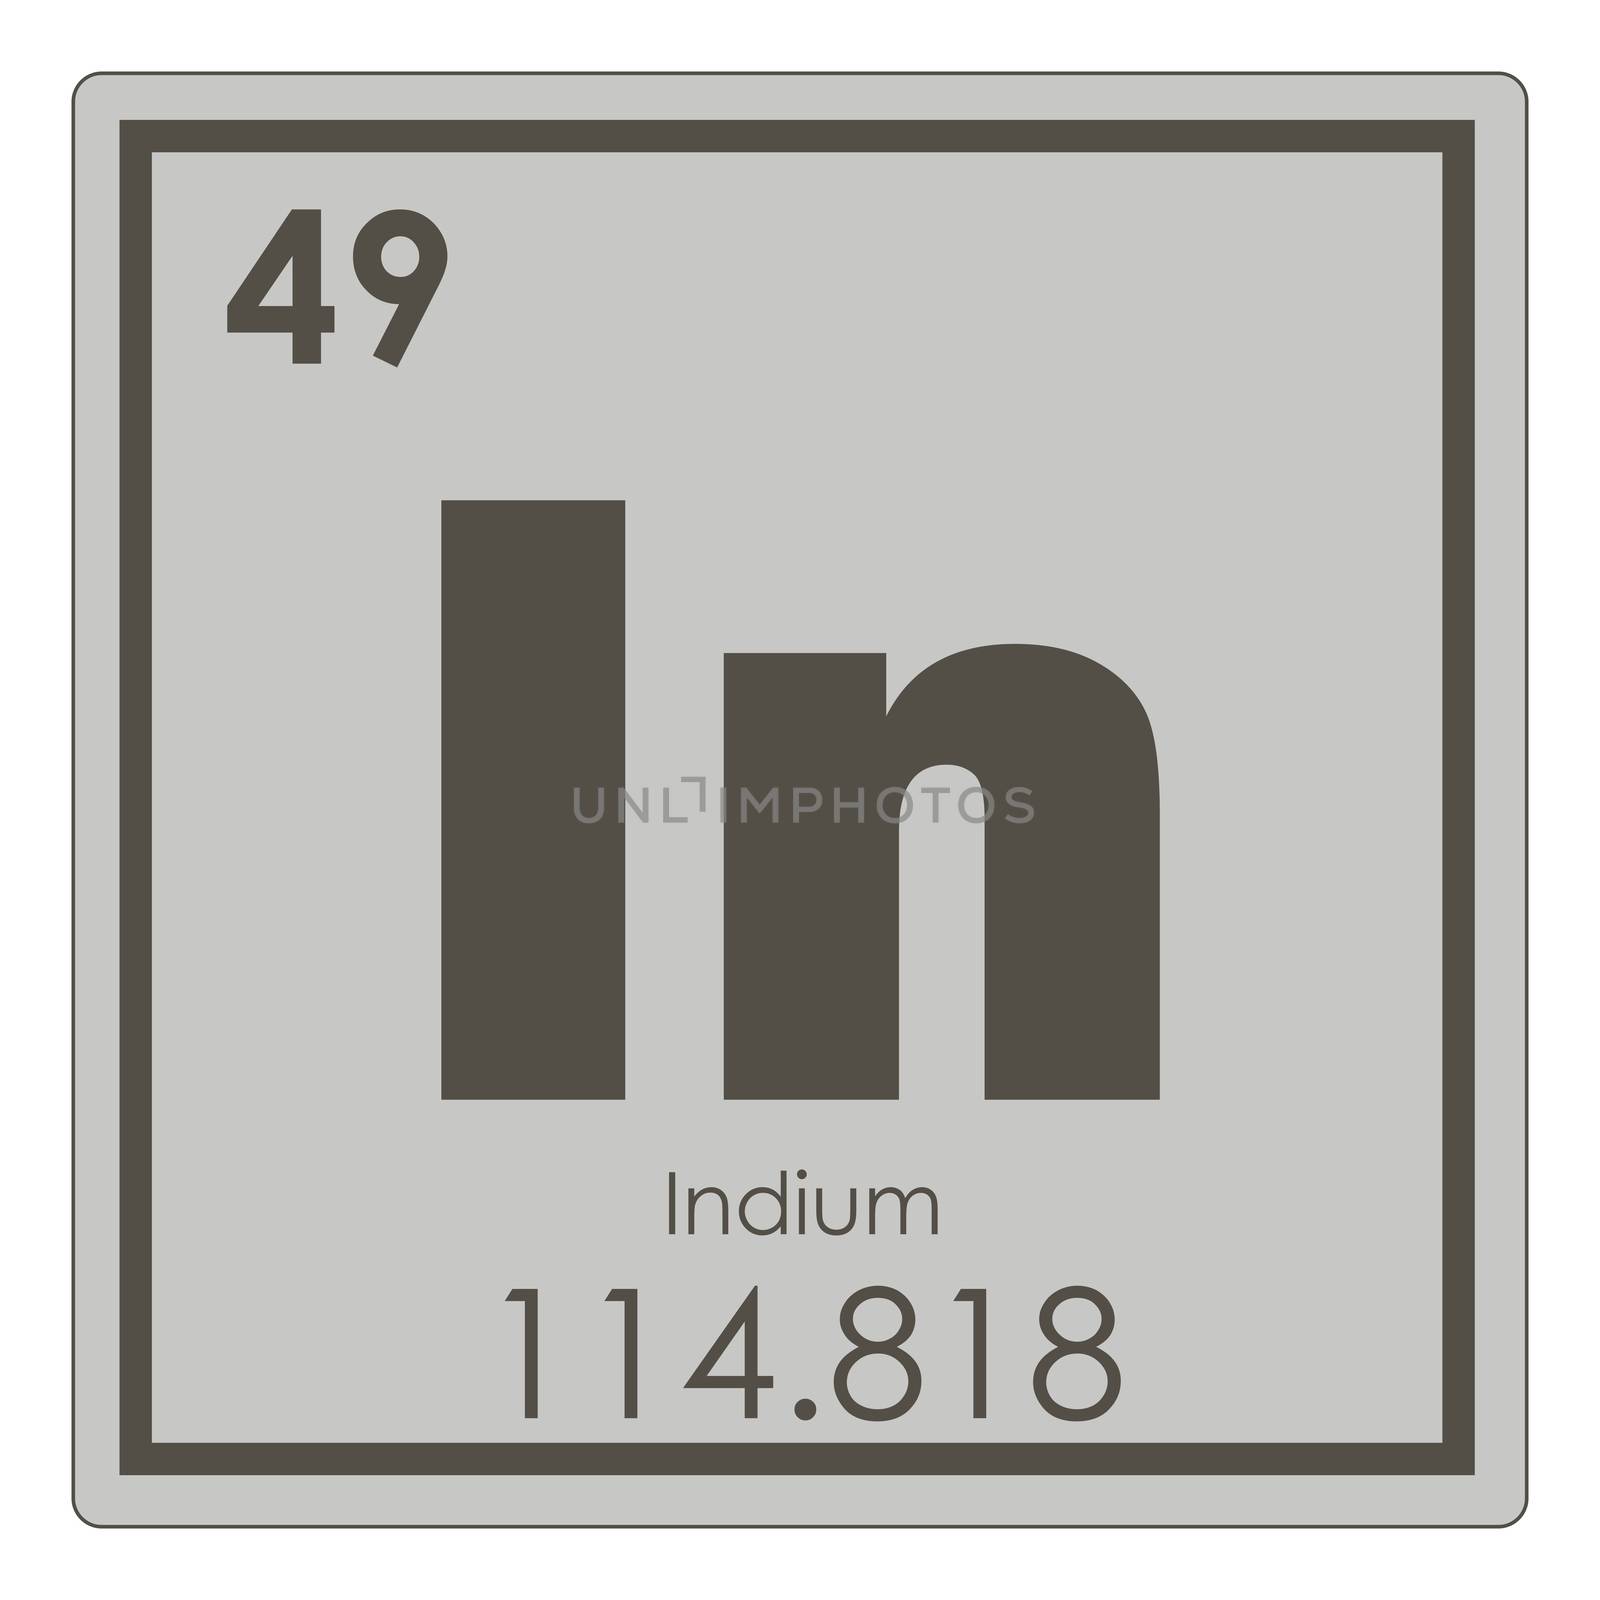 Indium chemical element by tony4urban